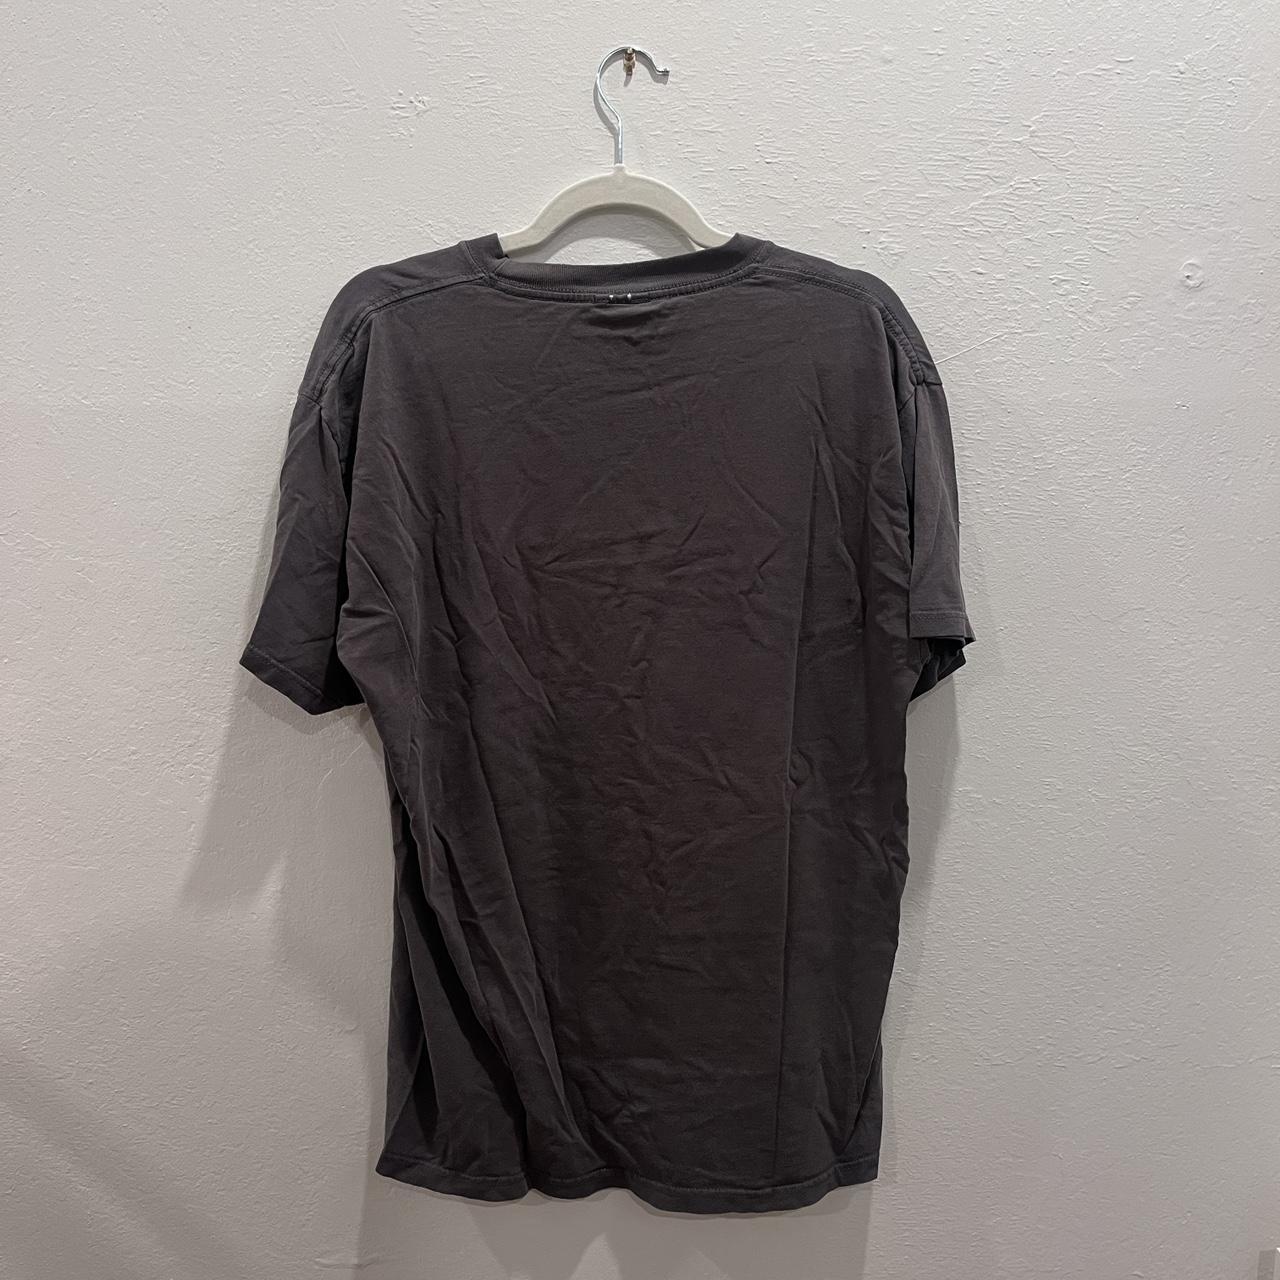 Men's Grey and Brown T-shirt (3)